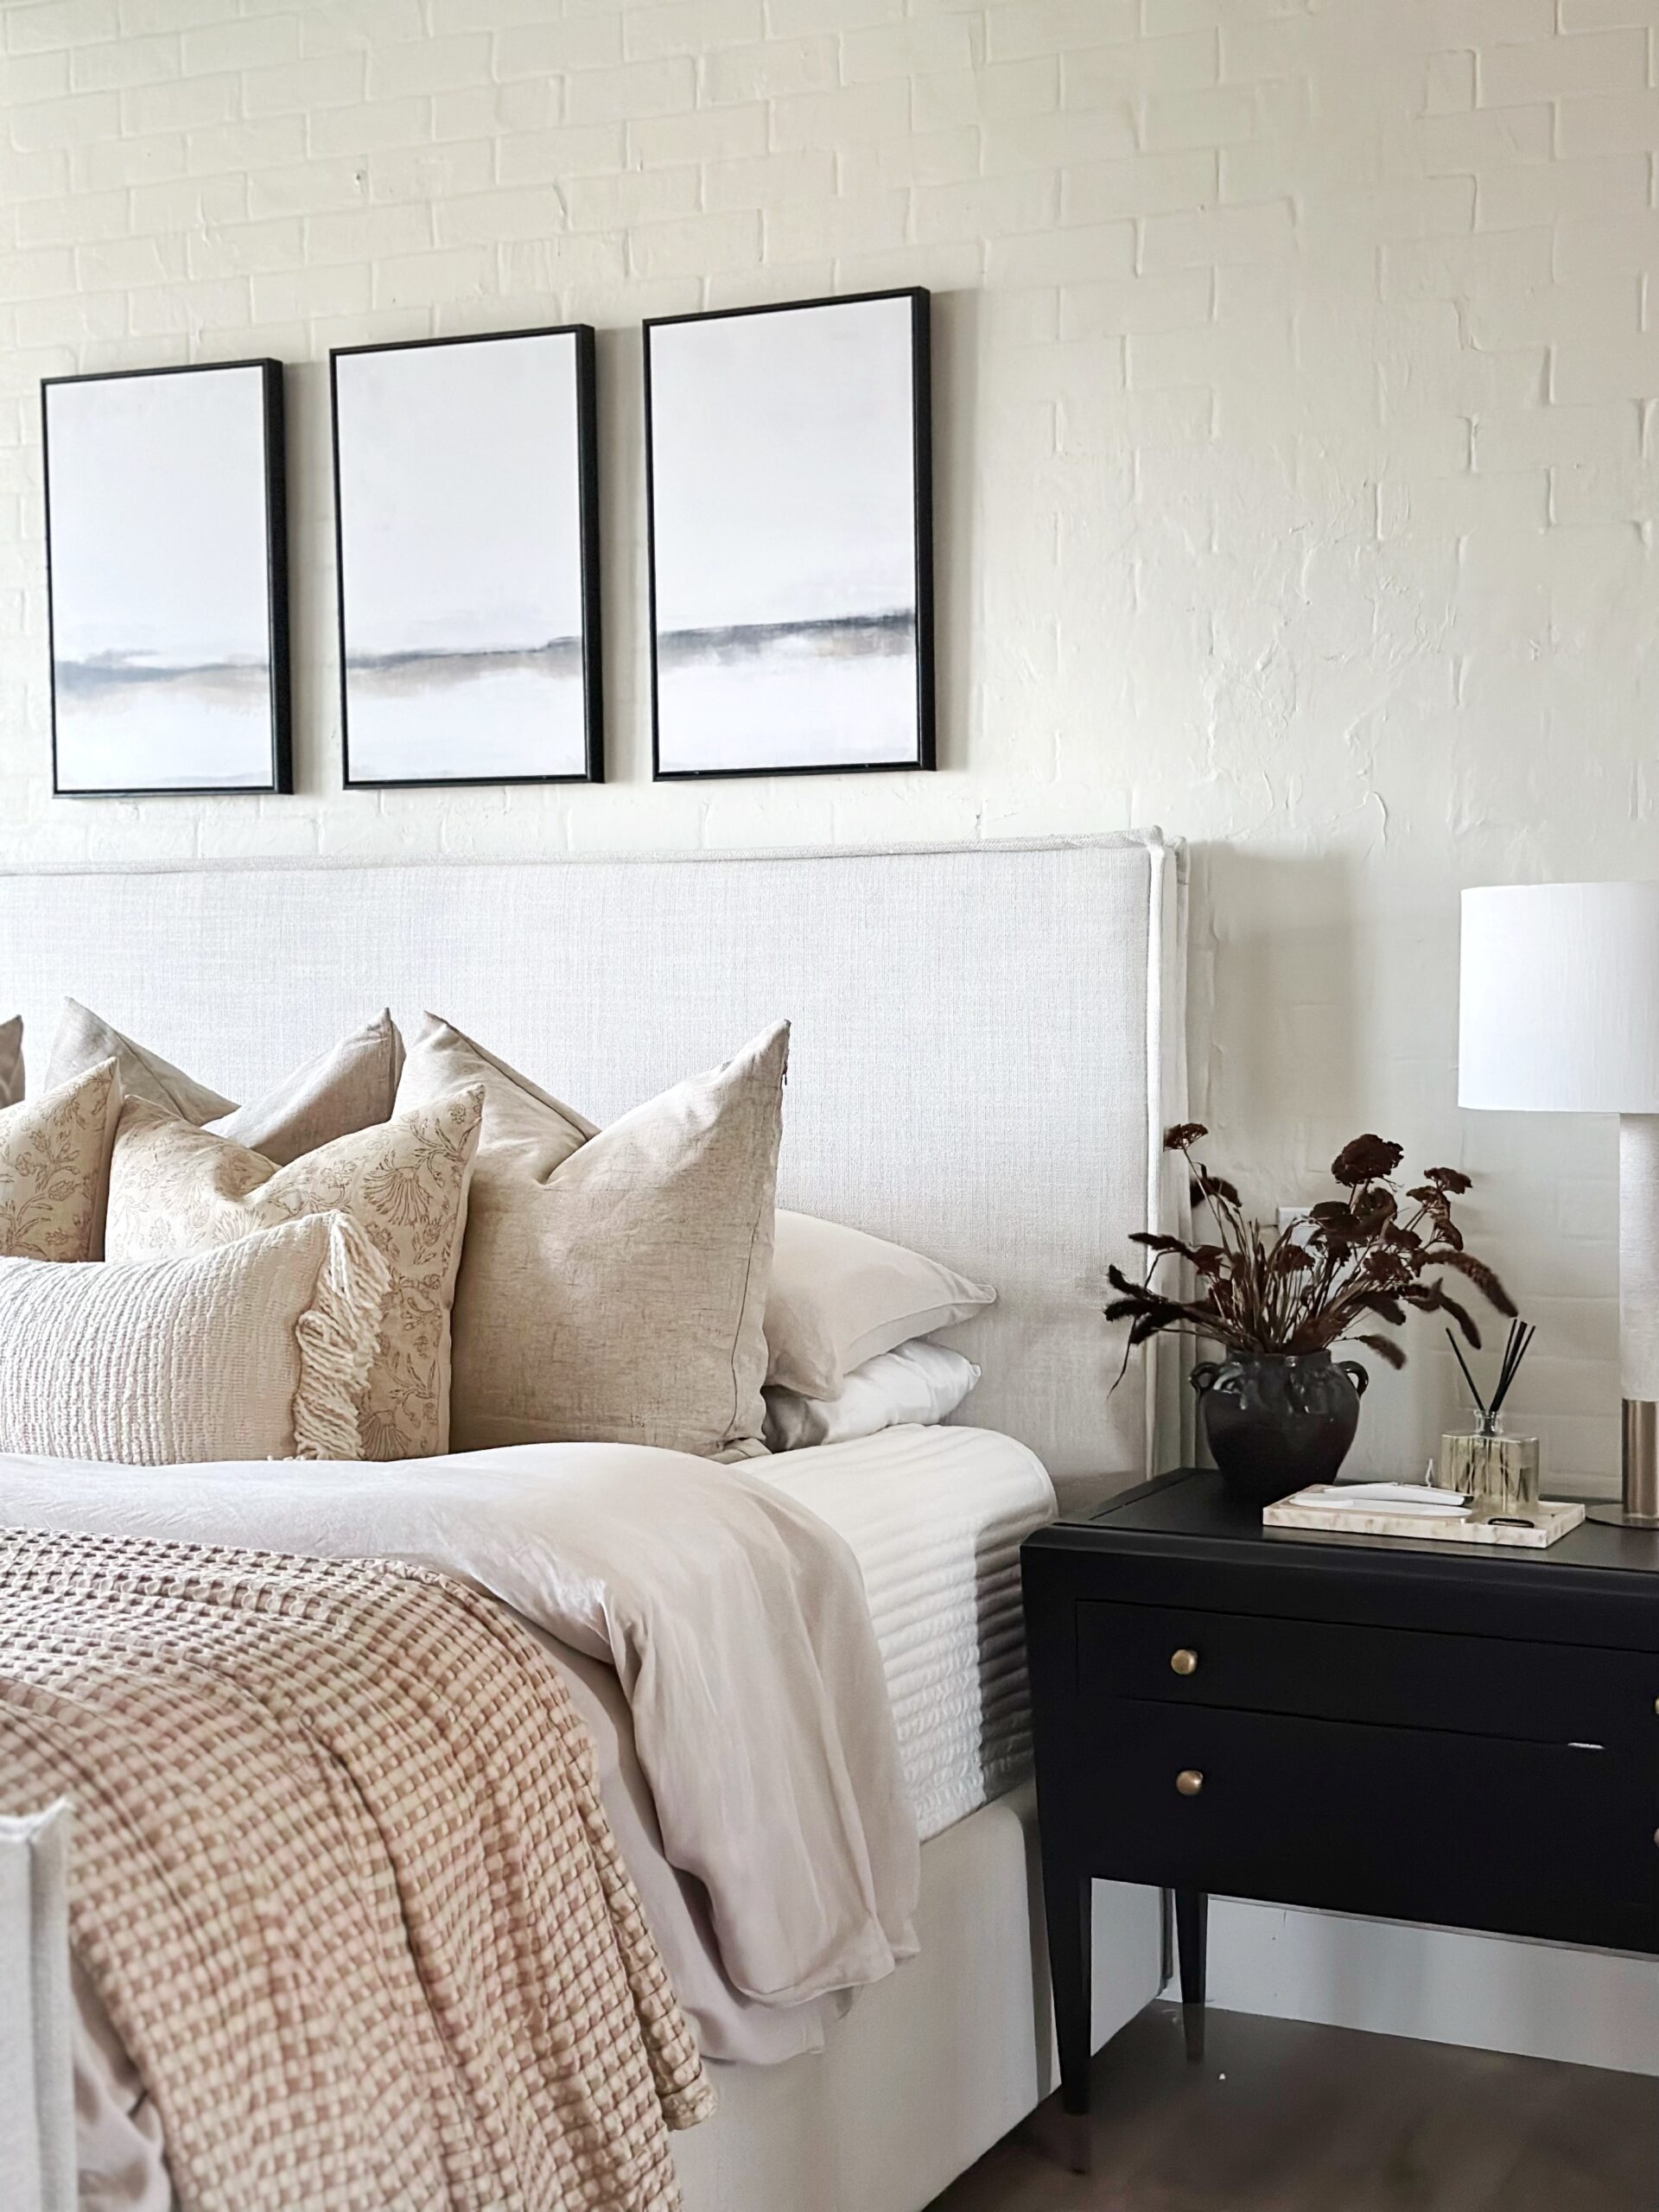 My Bedroom Project | #neutralbedding #whitebrick #wall #bedroomproject #europillows #framedcanvas #area rug #waffleknit #blanket, #homedecor #neutral #decor #quilt #bedding #beige #white #tablelamp